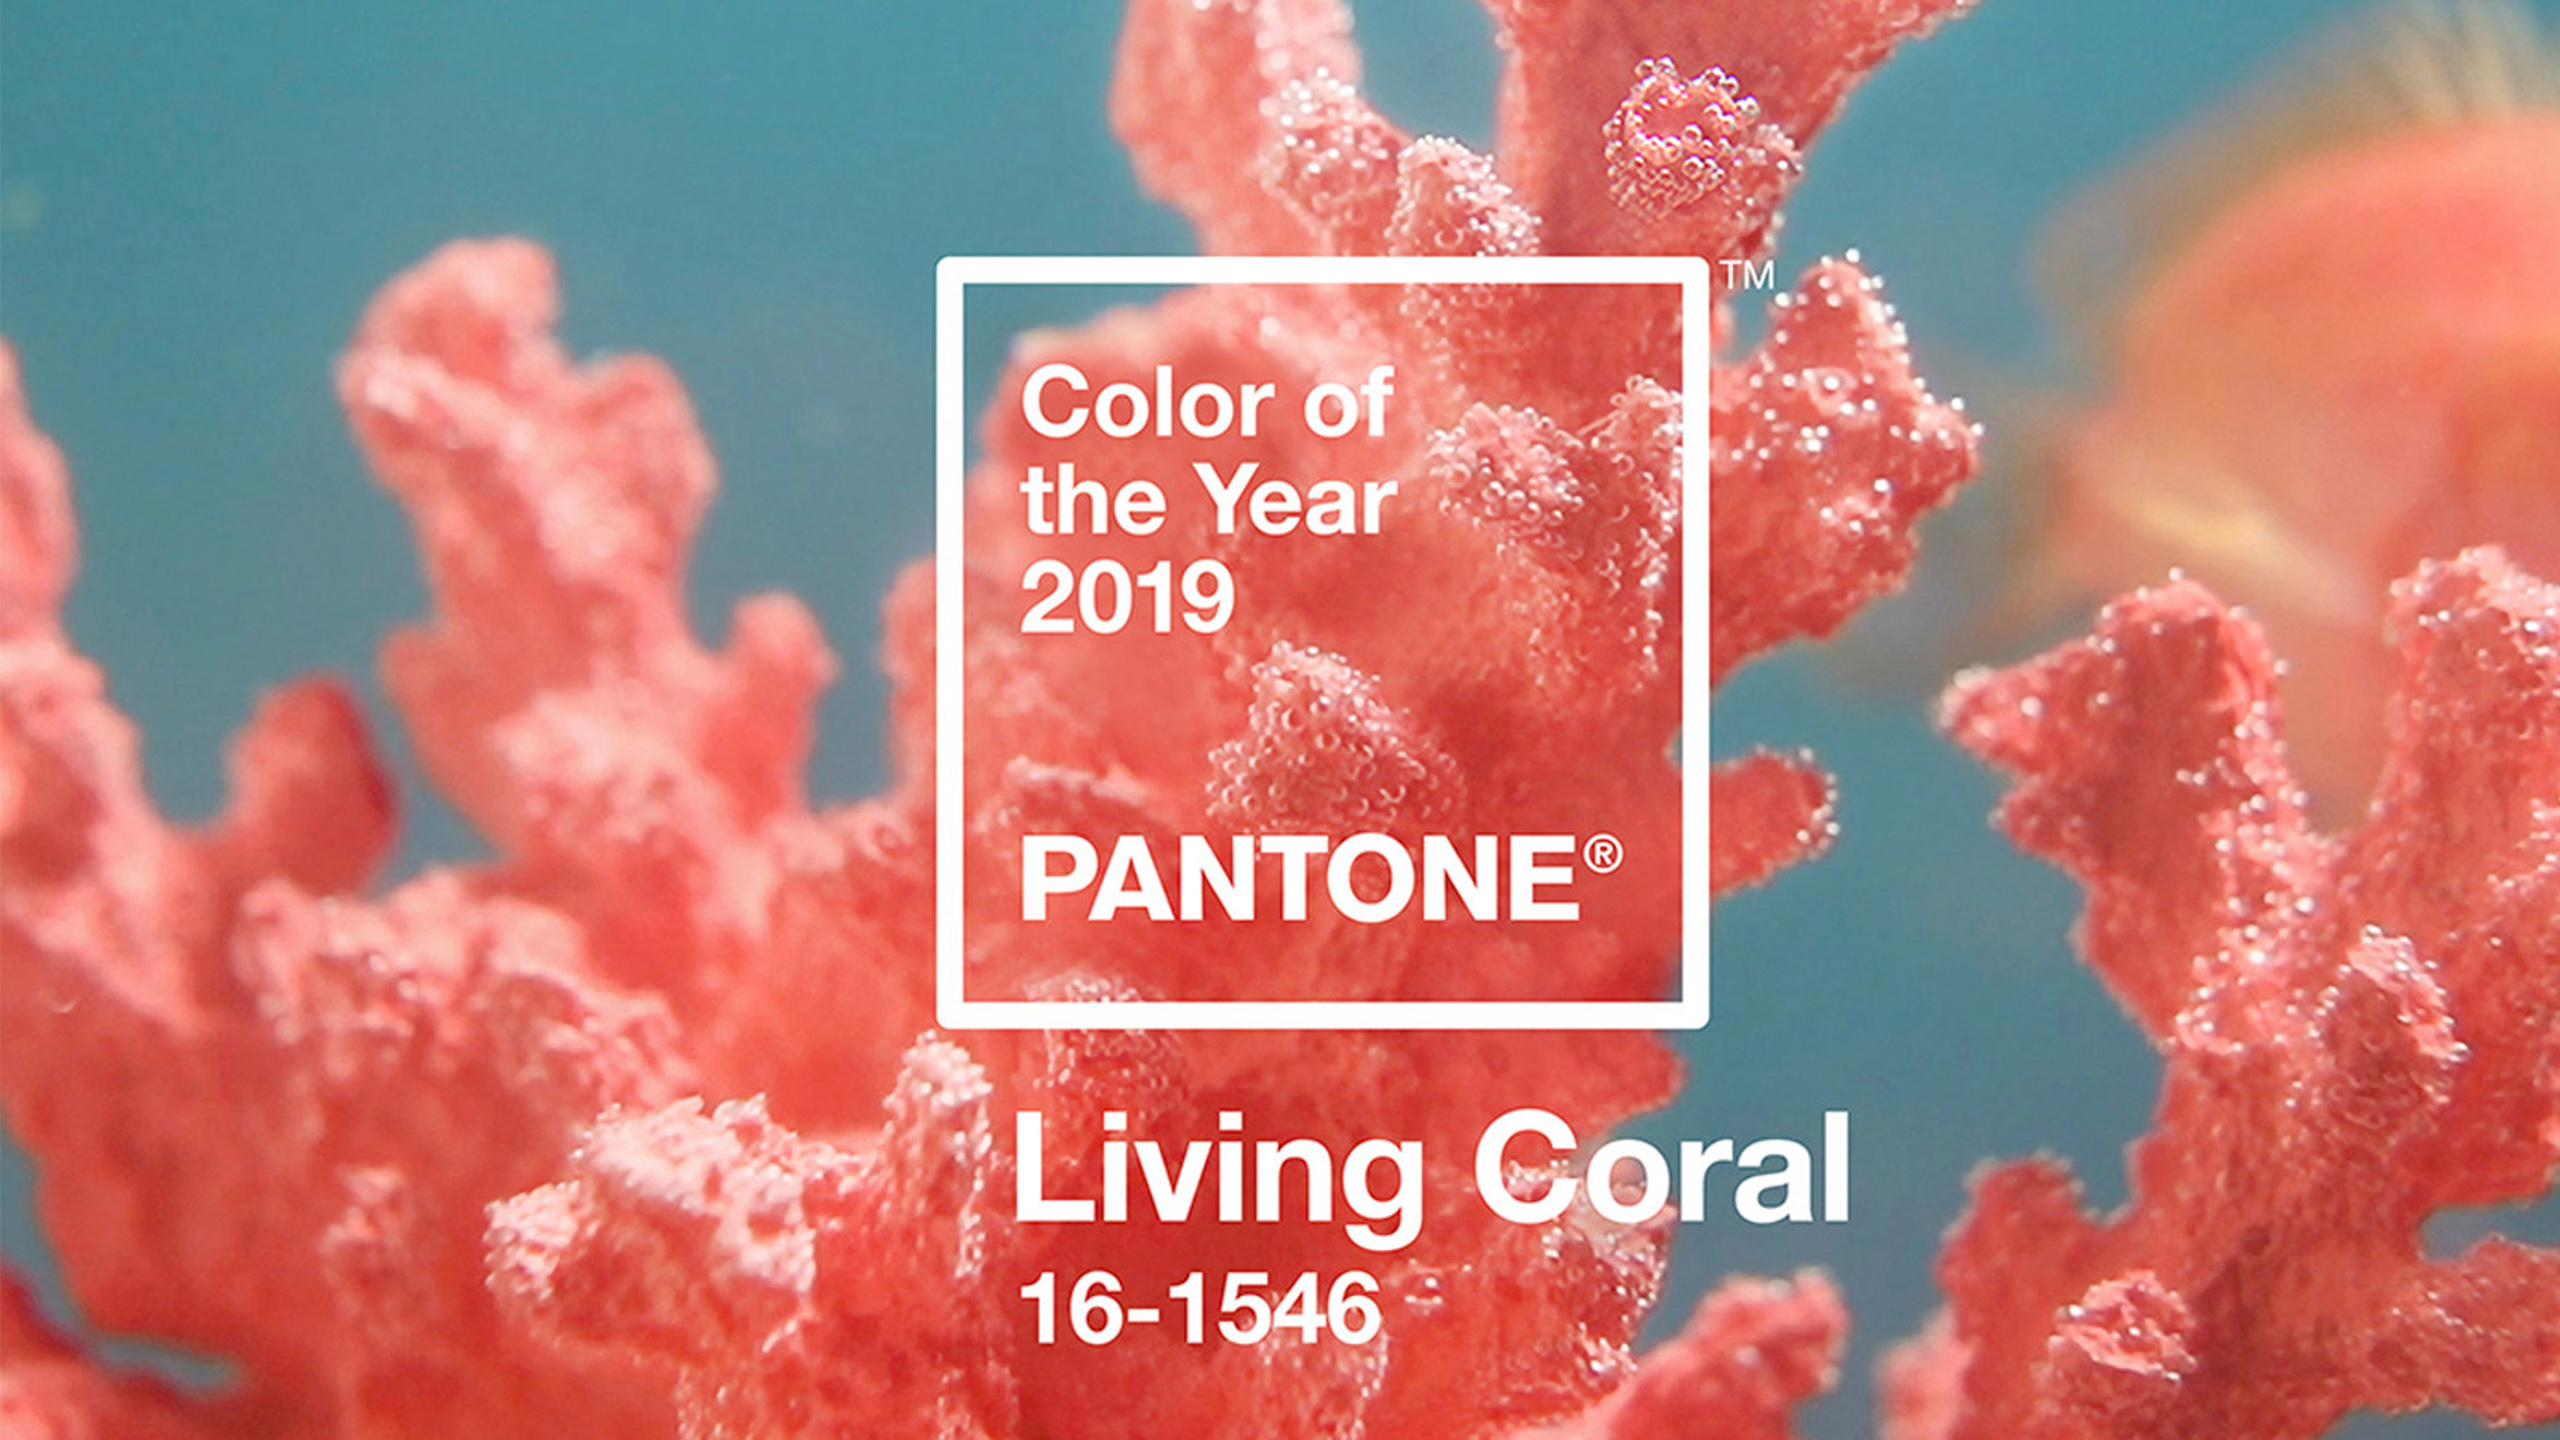 Coral color. Pantone 16-1546 живой коралл / Living Coral (2019). Пантон 2019. Цвет года пантон 2019. Коралловый Pantone.